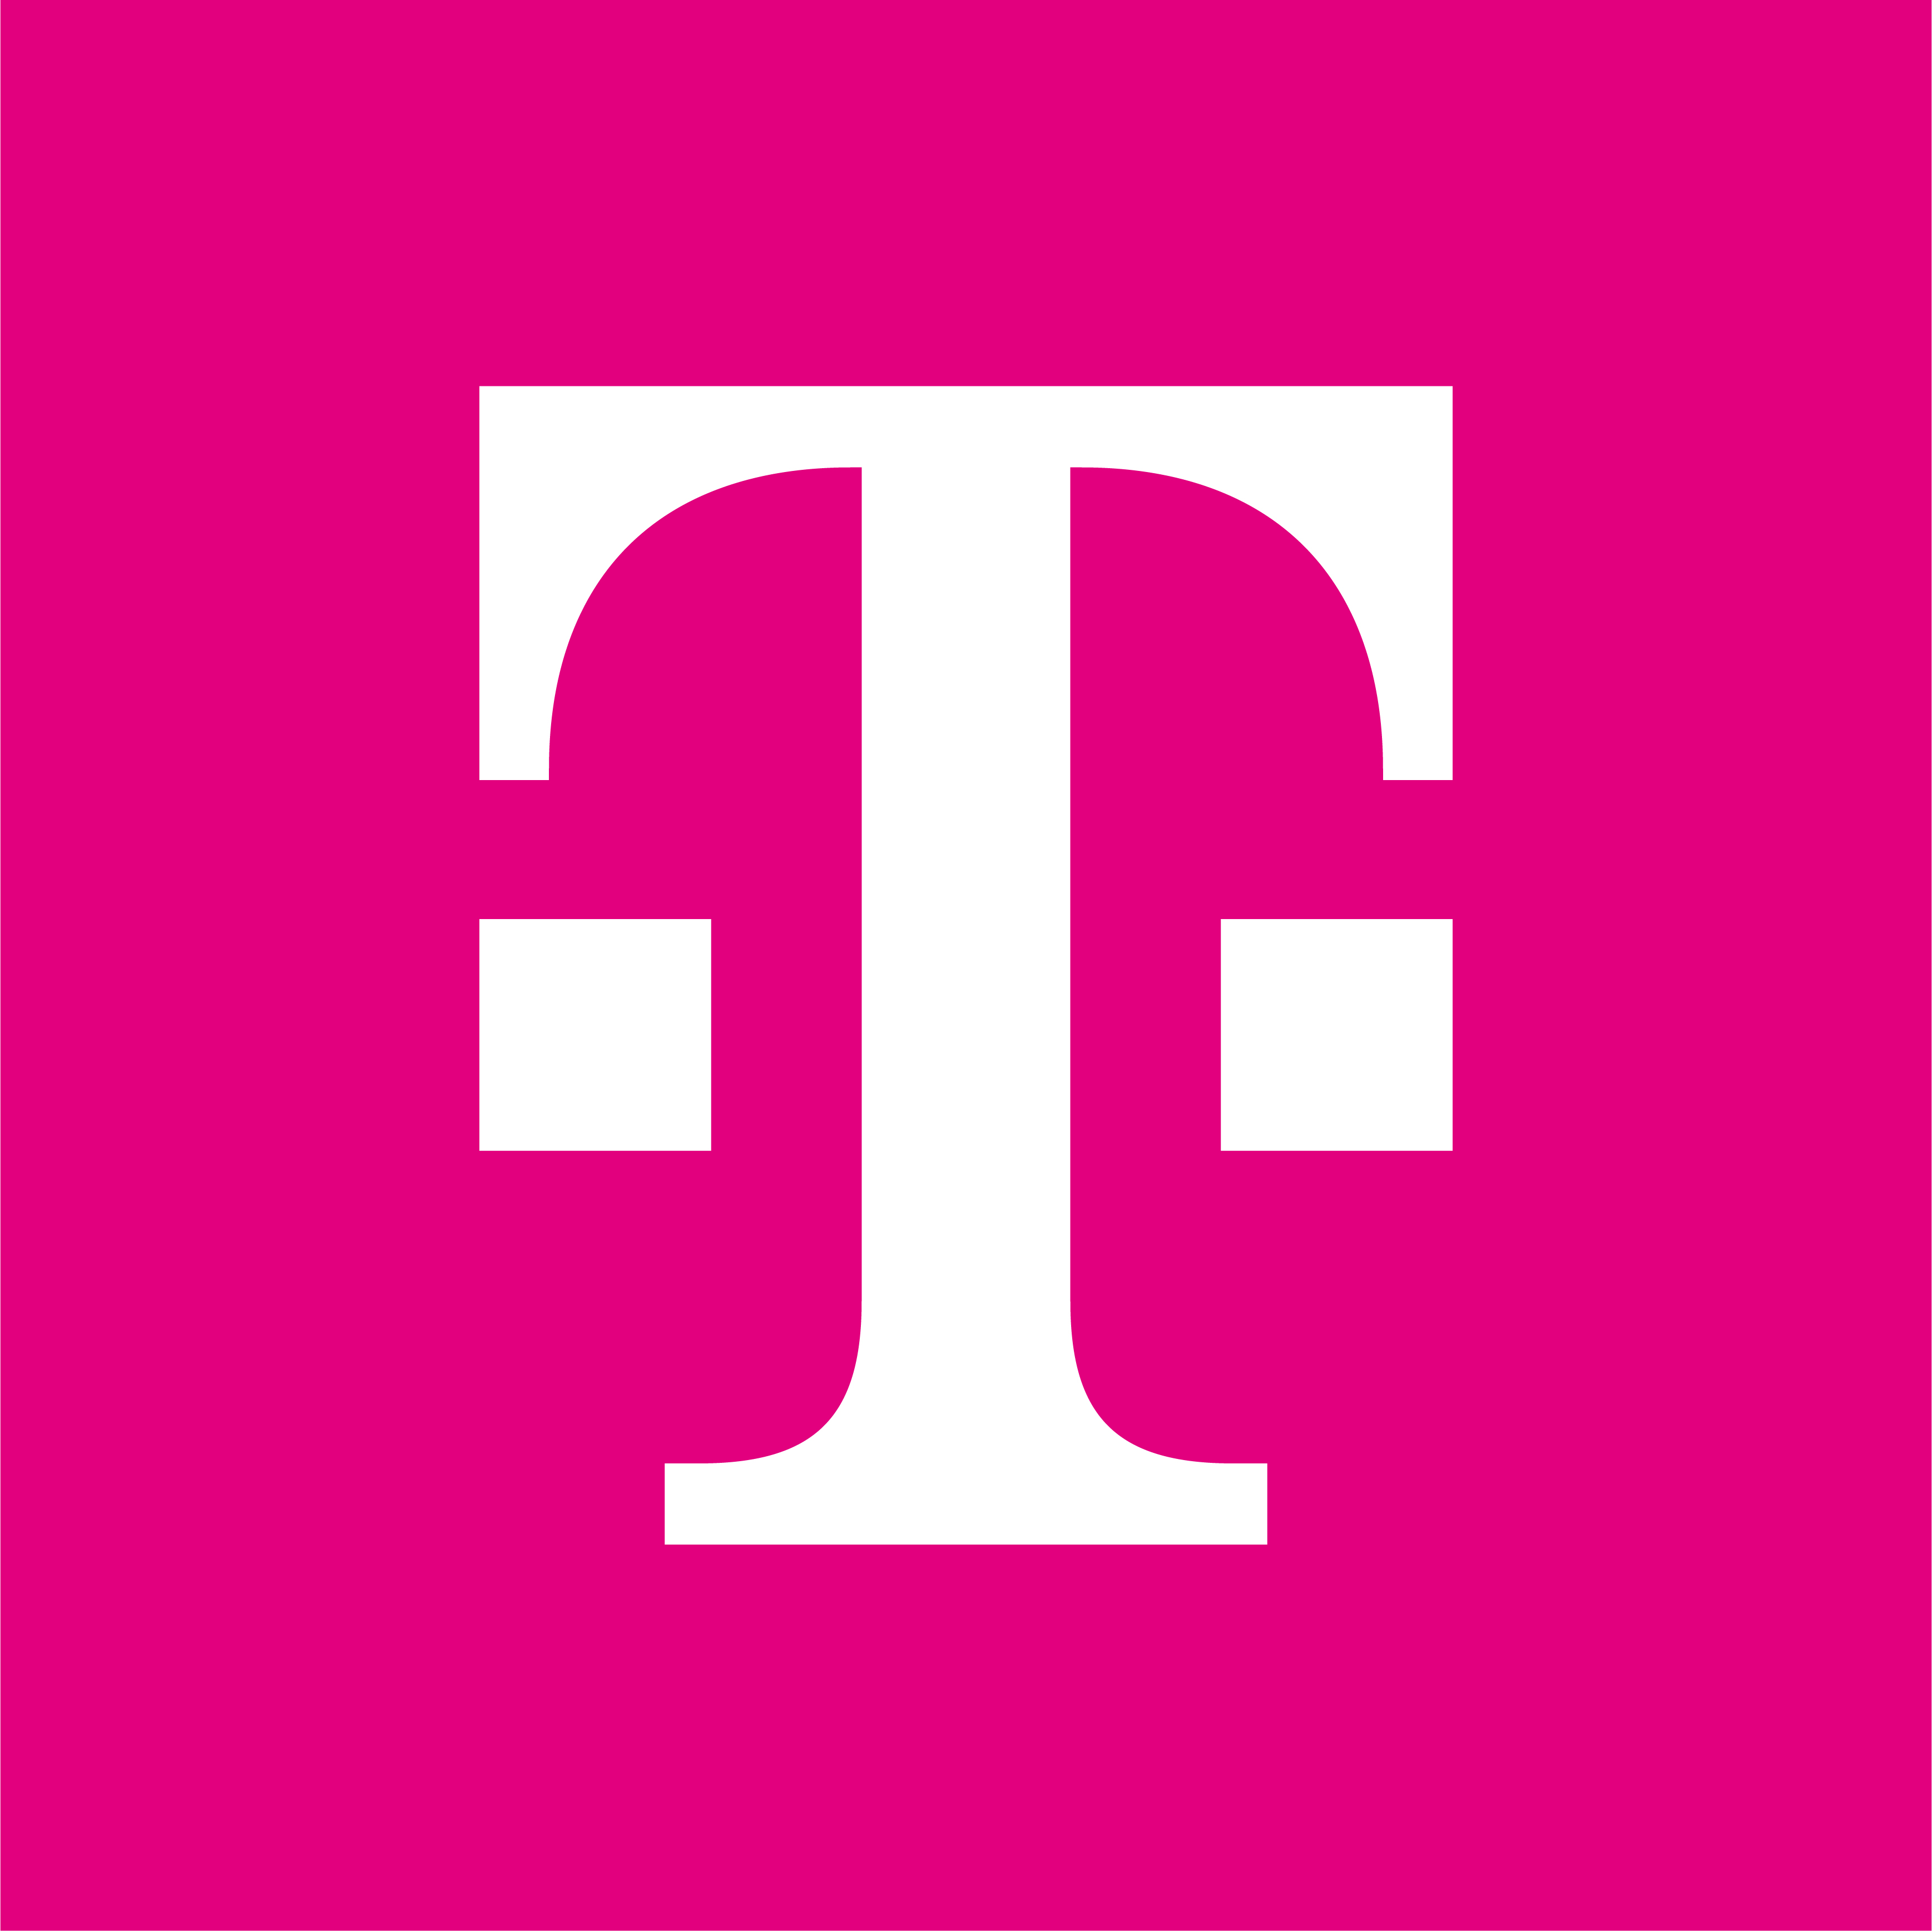 Telekom MMS GmbH